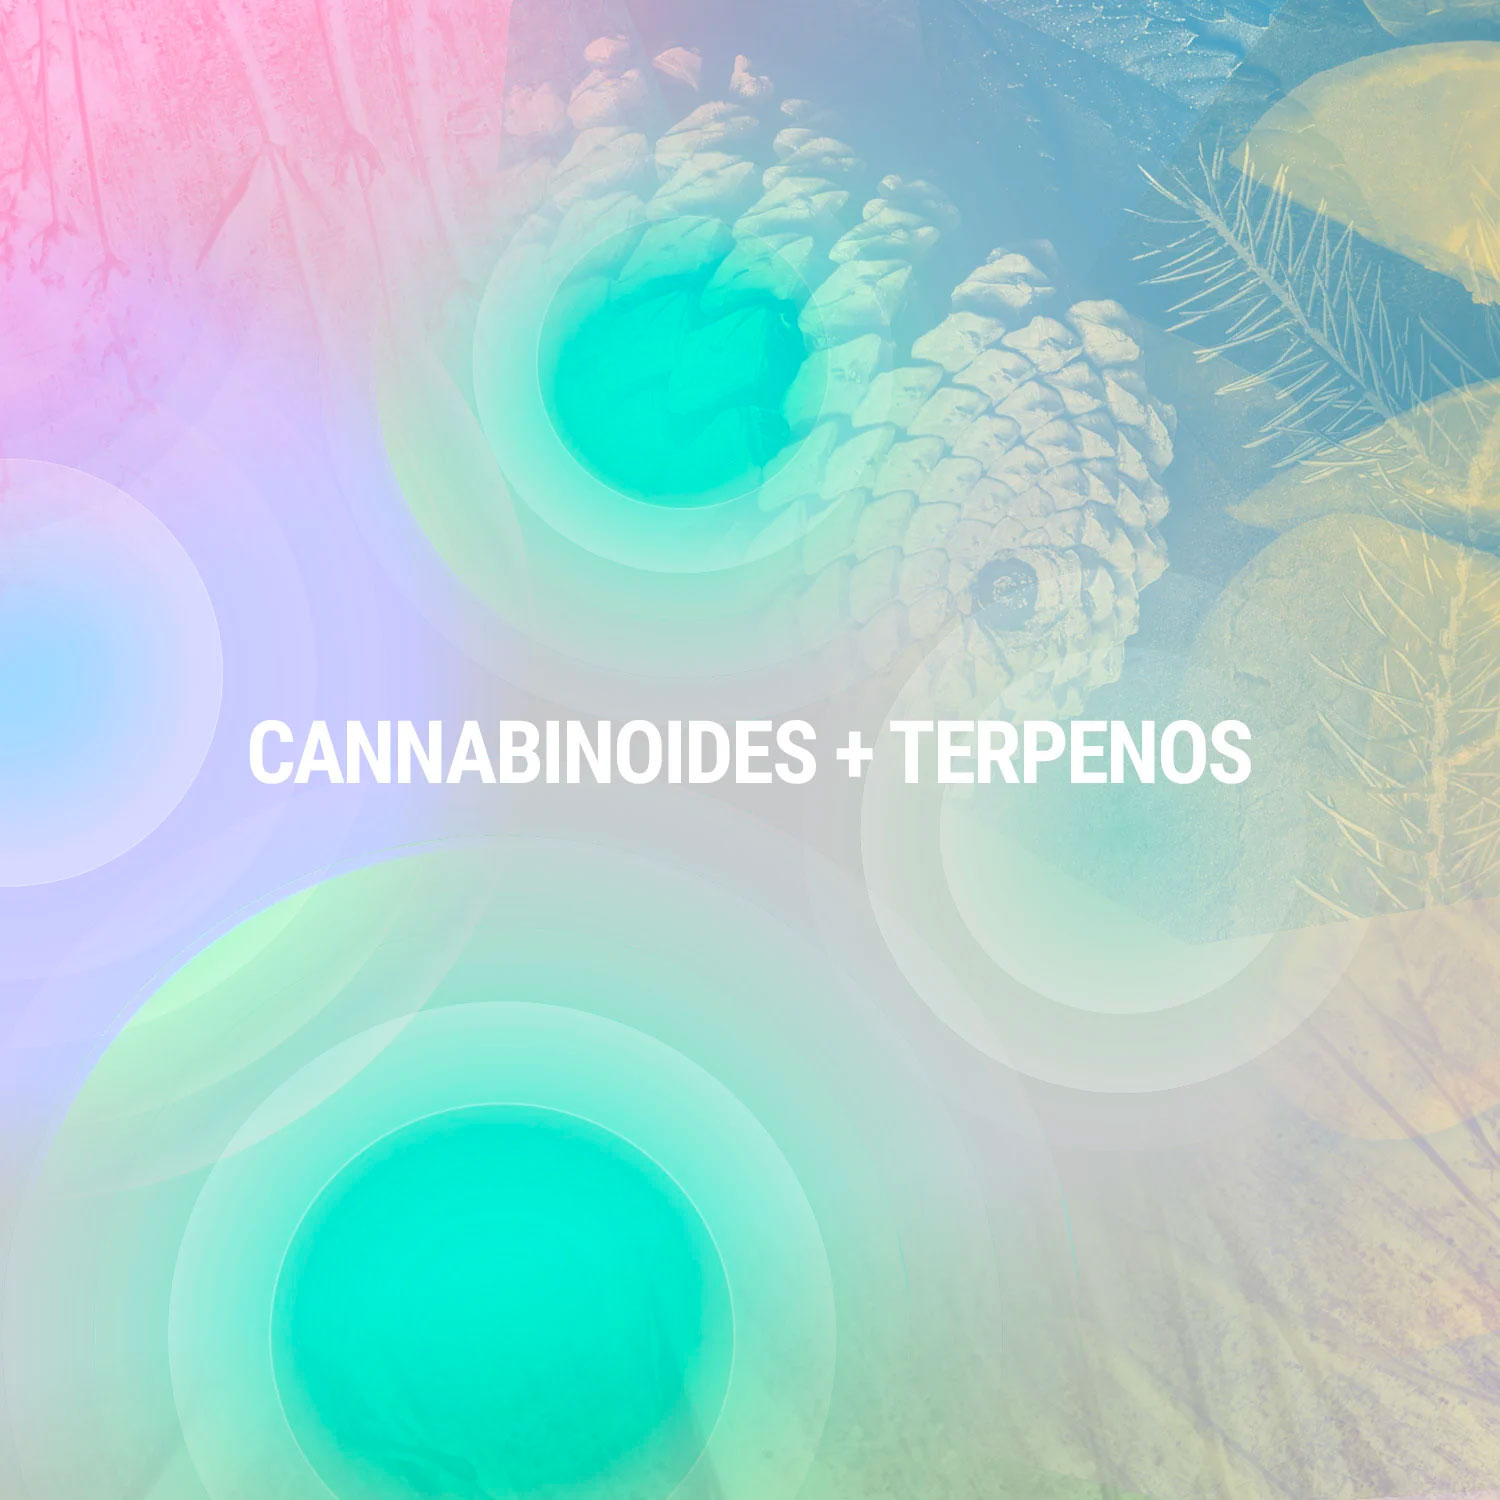 Cannabinoids + Terpens